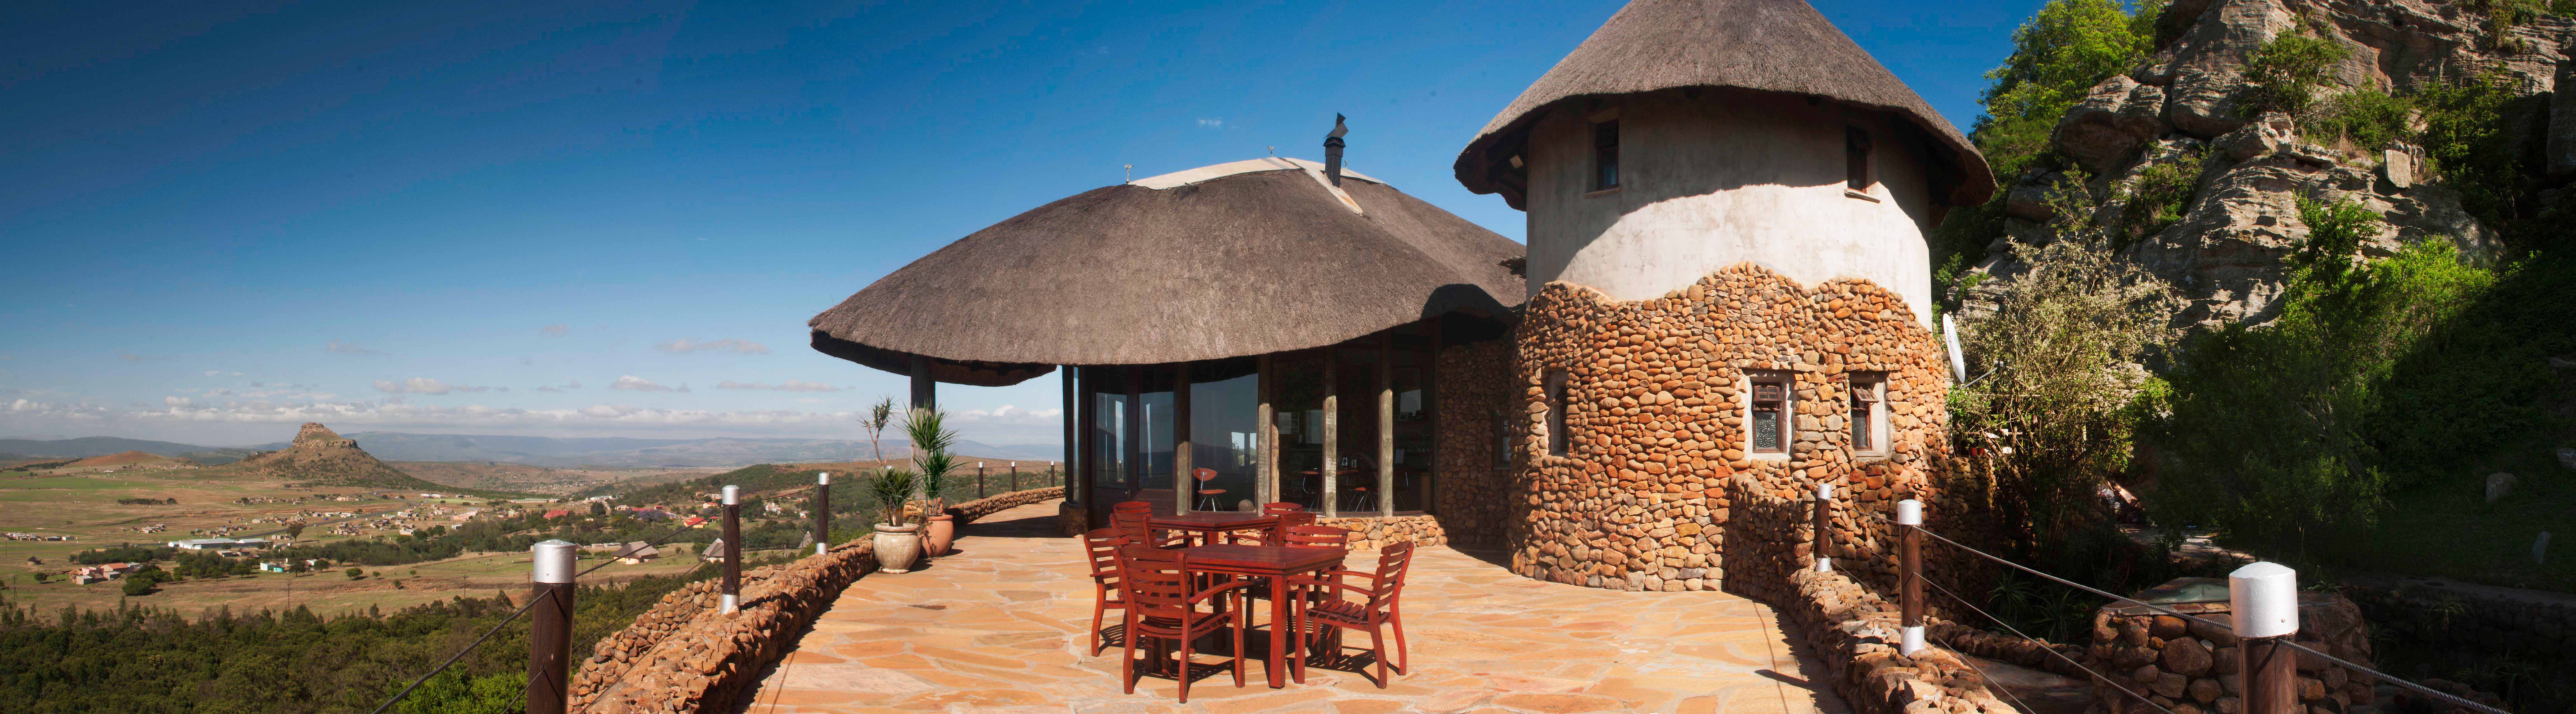 Isandlwana South Africa Panorama